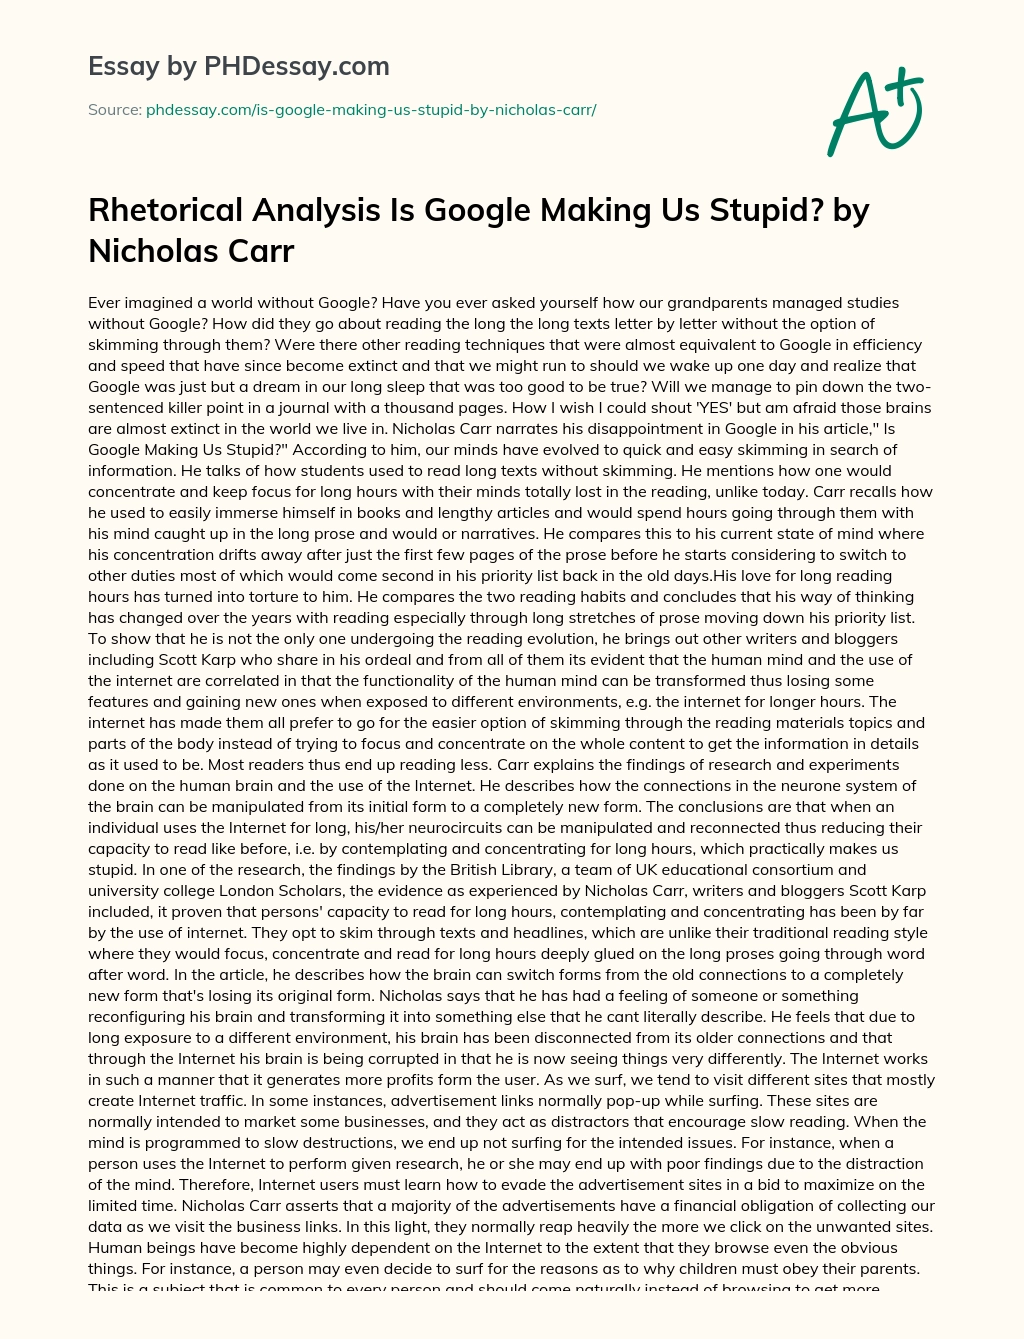 Rhetorical Analysis Is Google Making Us Stupid? by Nicholas Carr essay